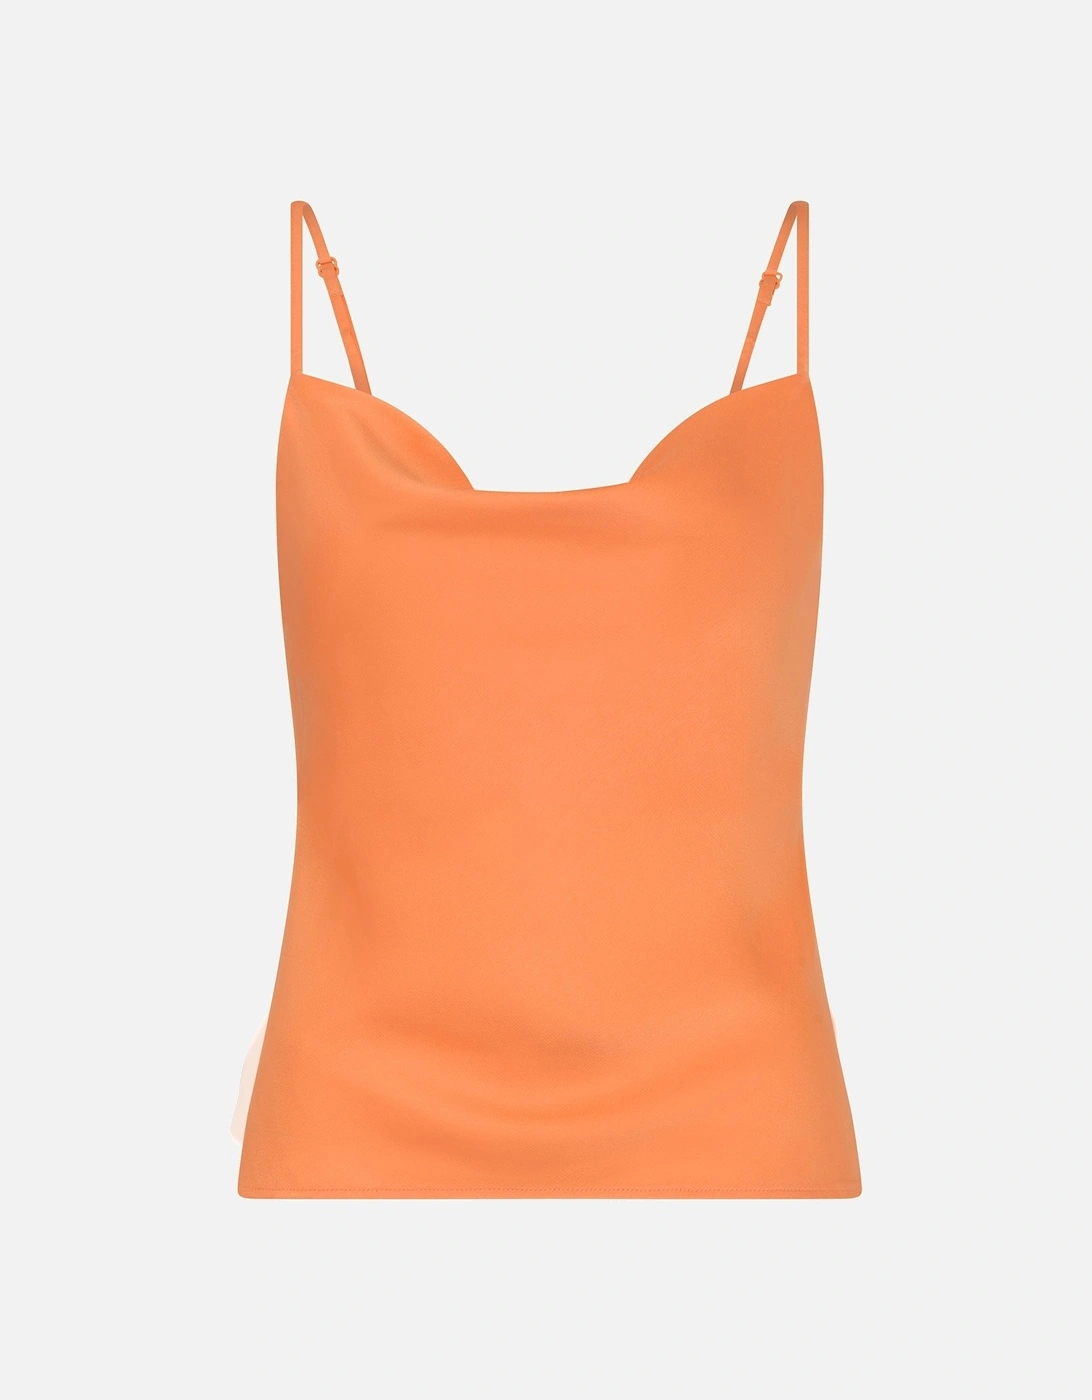 Kelly Cami Top in Rust Orange